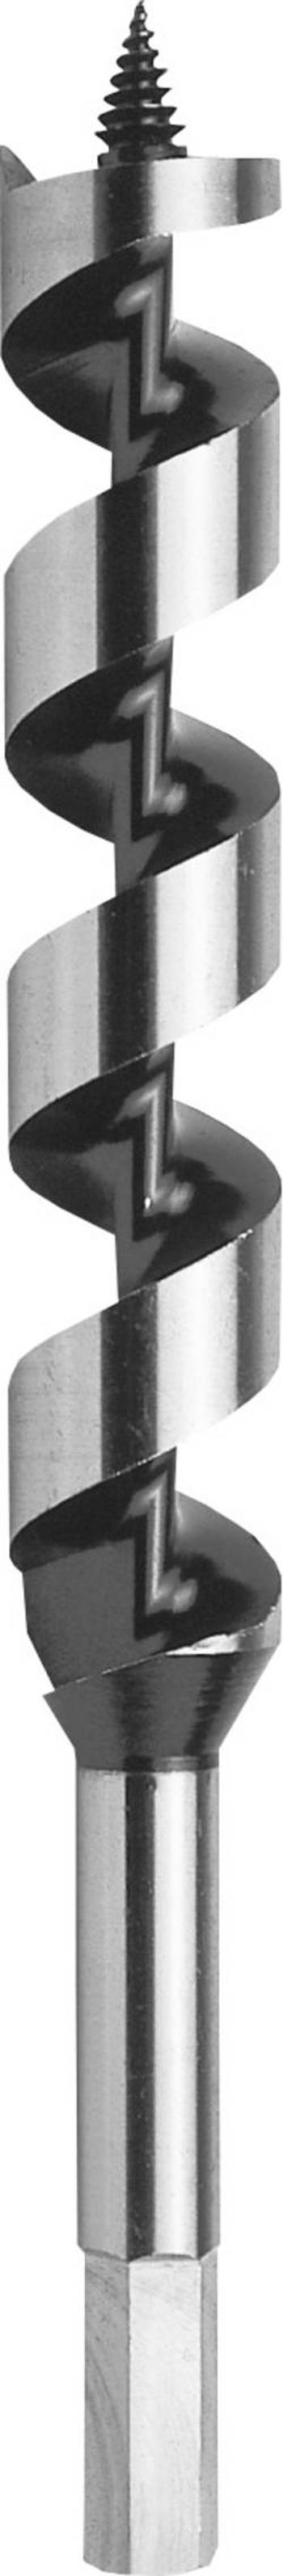 Hadovitý vrták 11 mm Bosch Accessories 2609255235, uchycení šestihran, délka 235 mm 1 ks